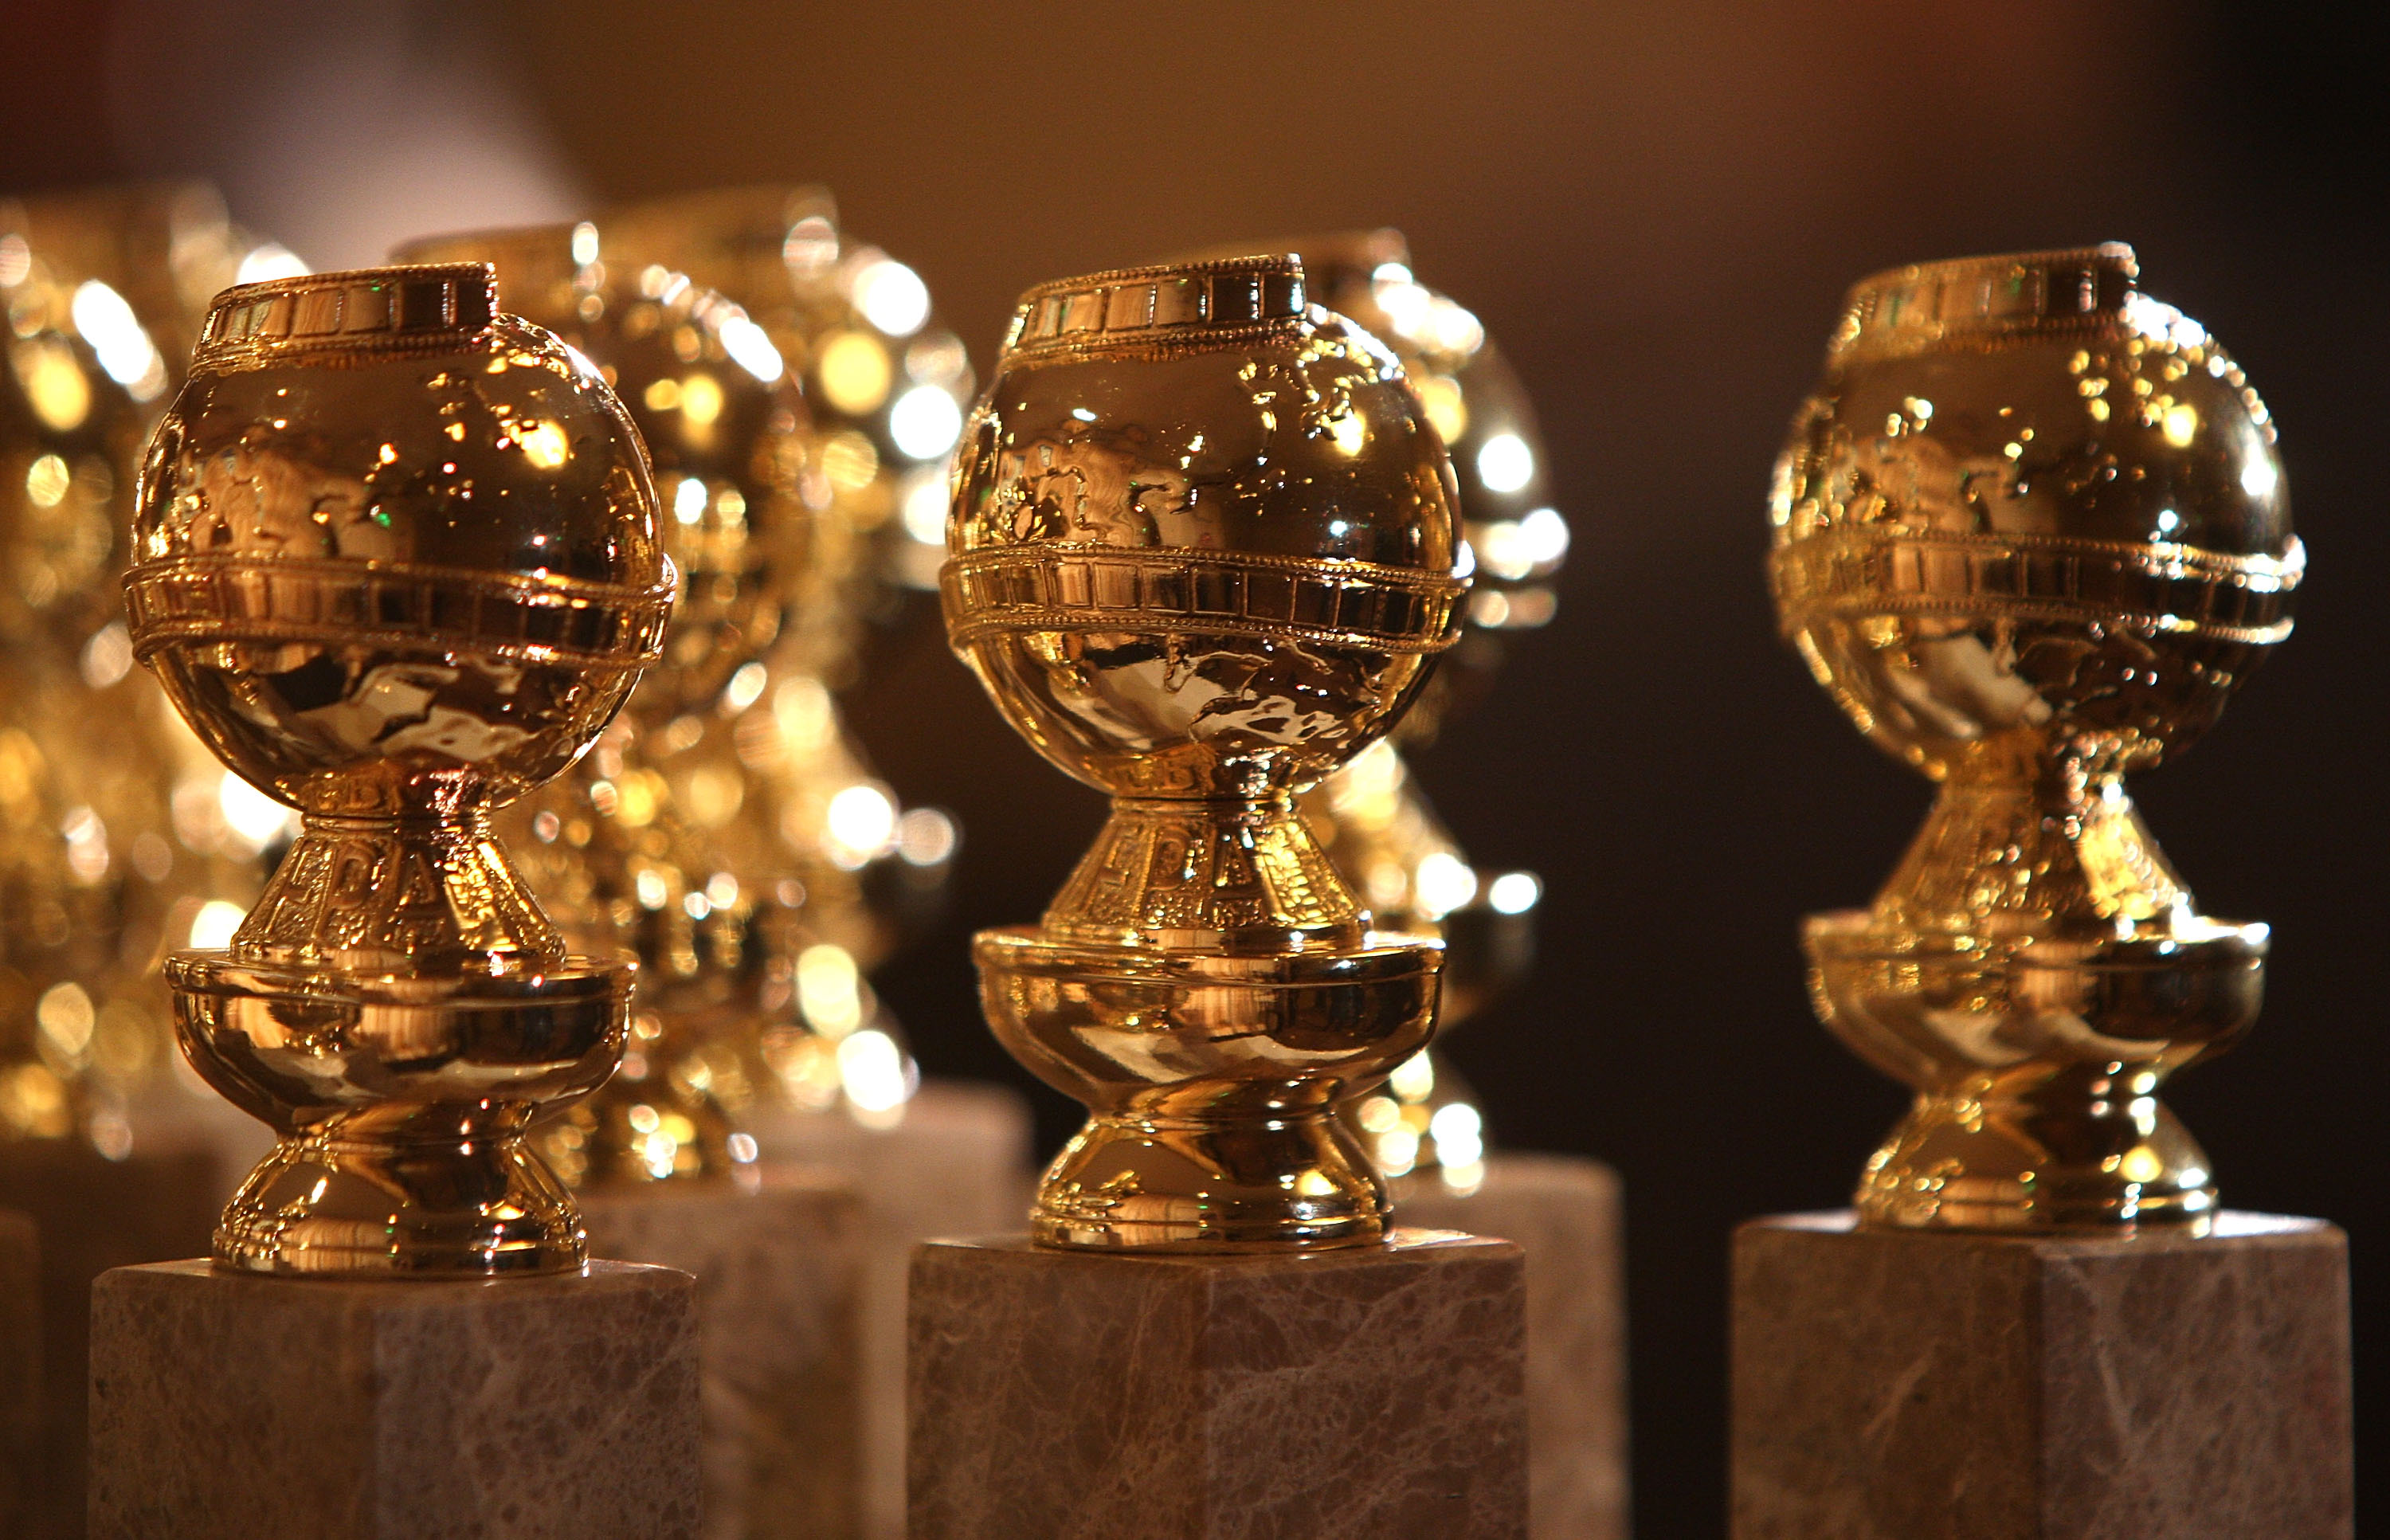 Golden Globes Awards 2015